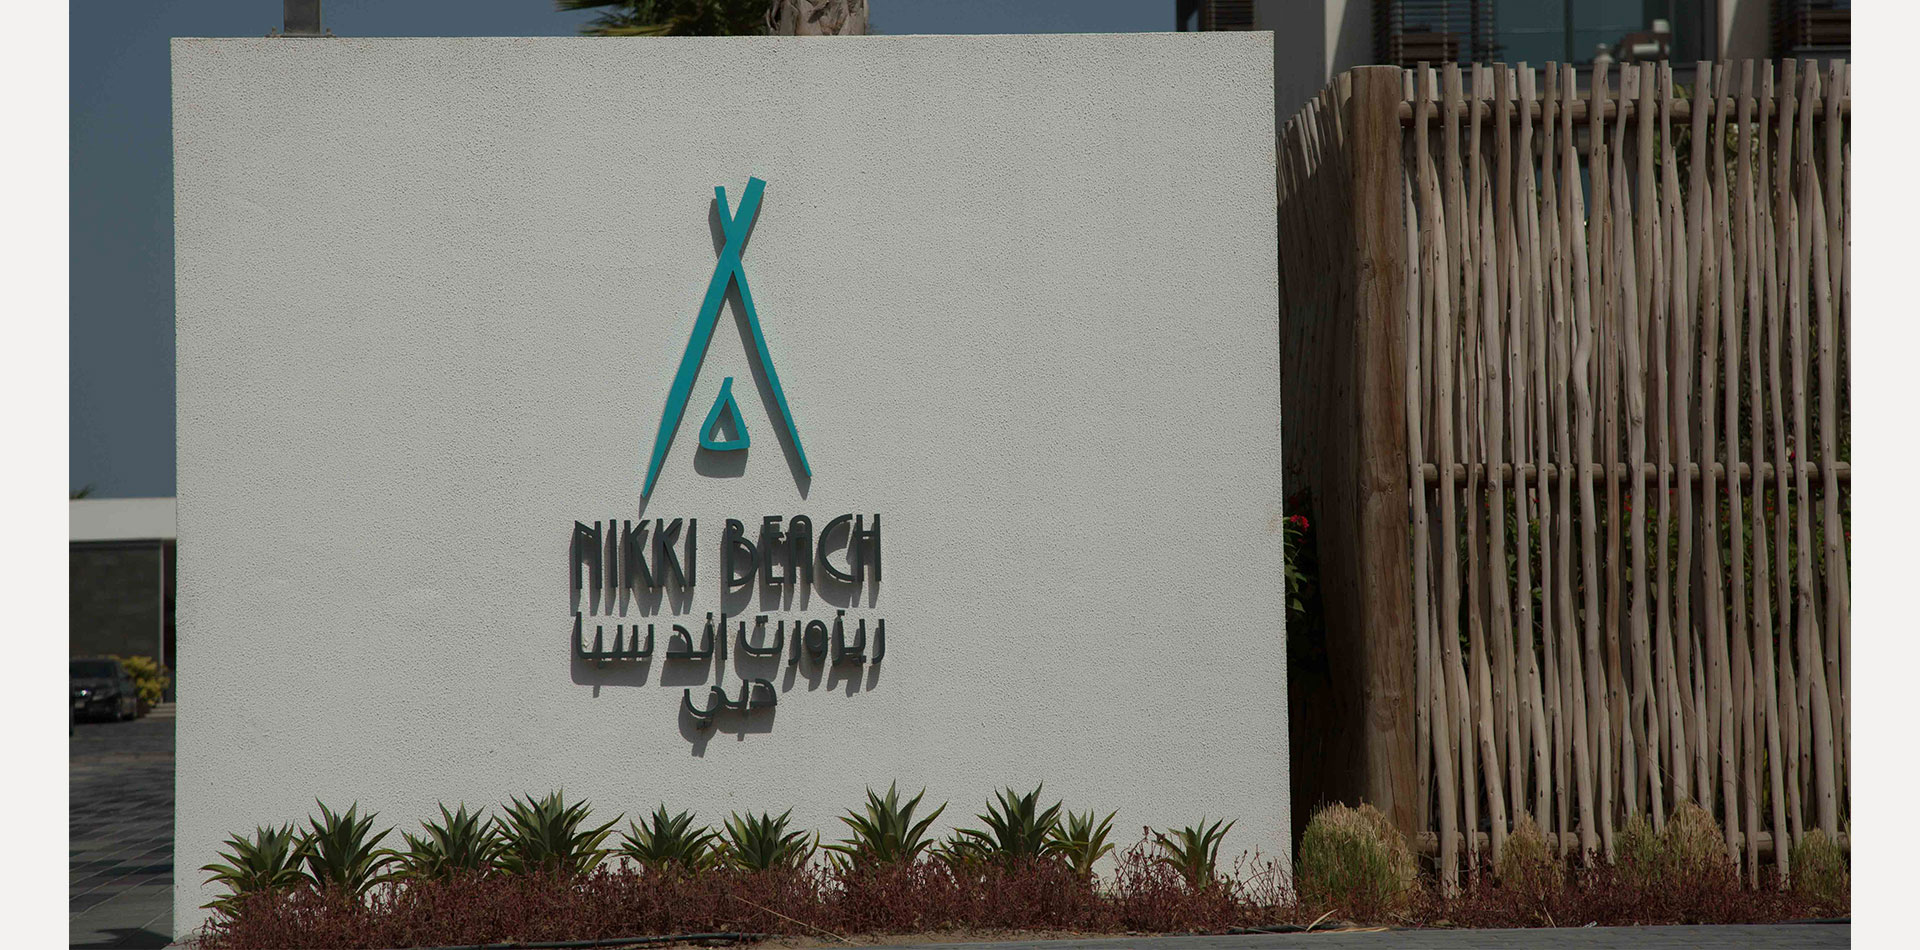 Monument Signage of Nikki Beach